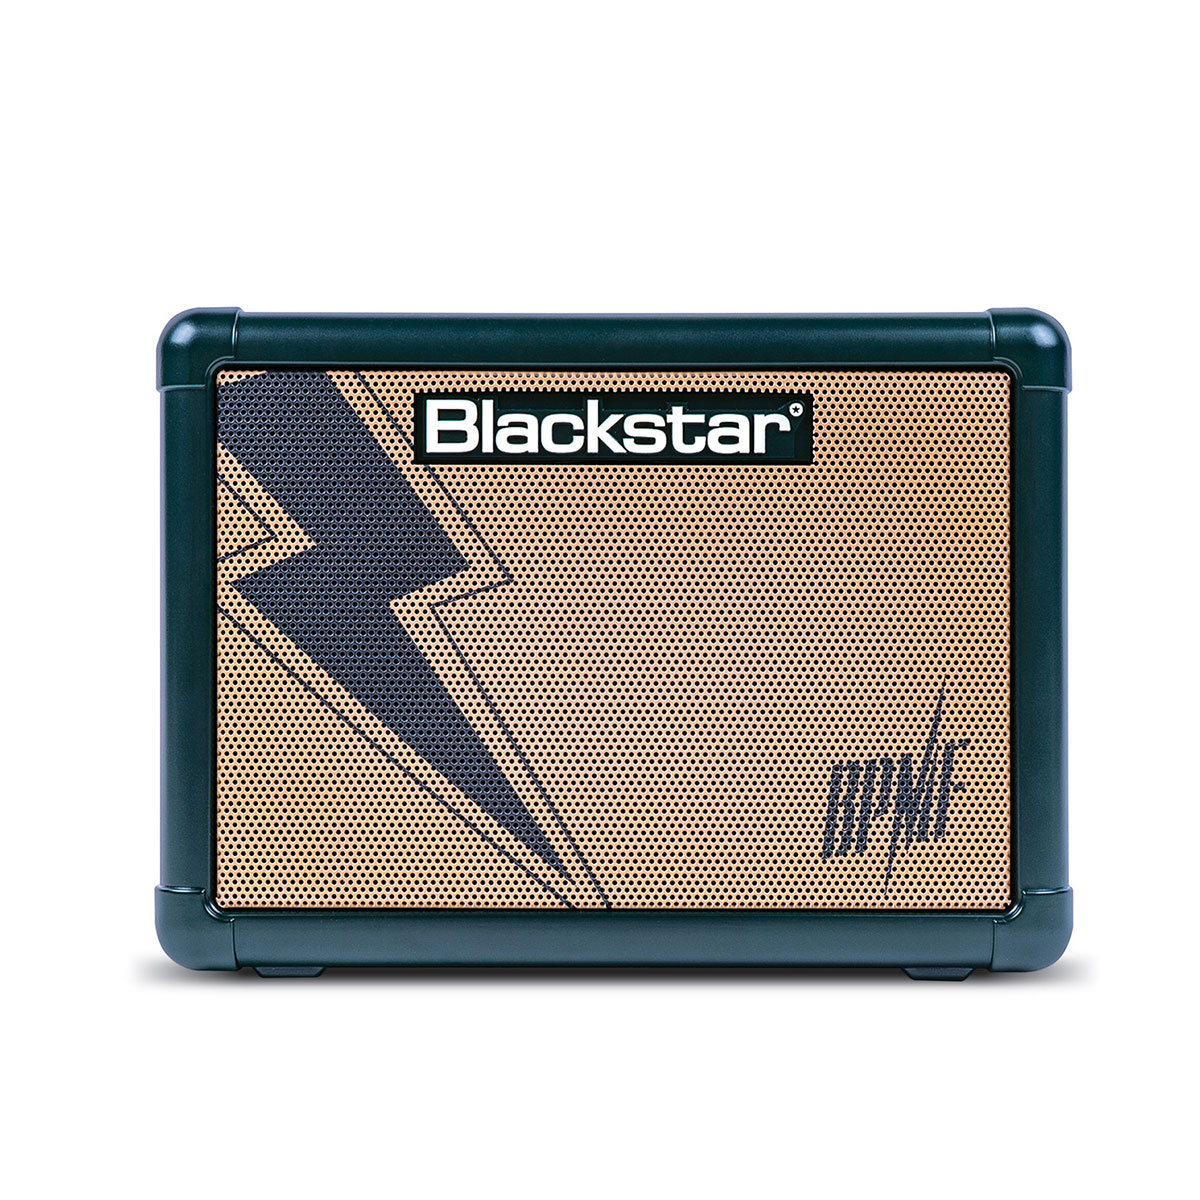 Blackstar FLY3 JJN モバイルギターアンプ ジャレットジェームスニコルモデル 【ブラックスター】【数量限定】 -  島村楽器オンラインストア